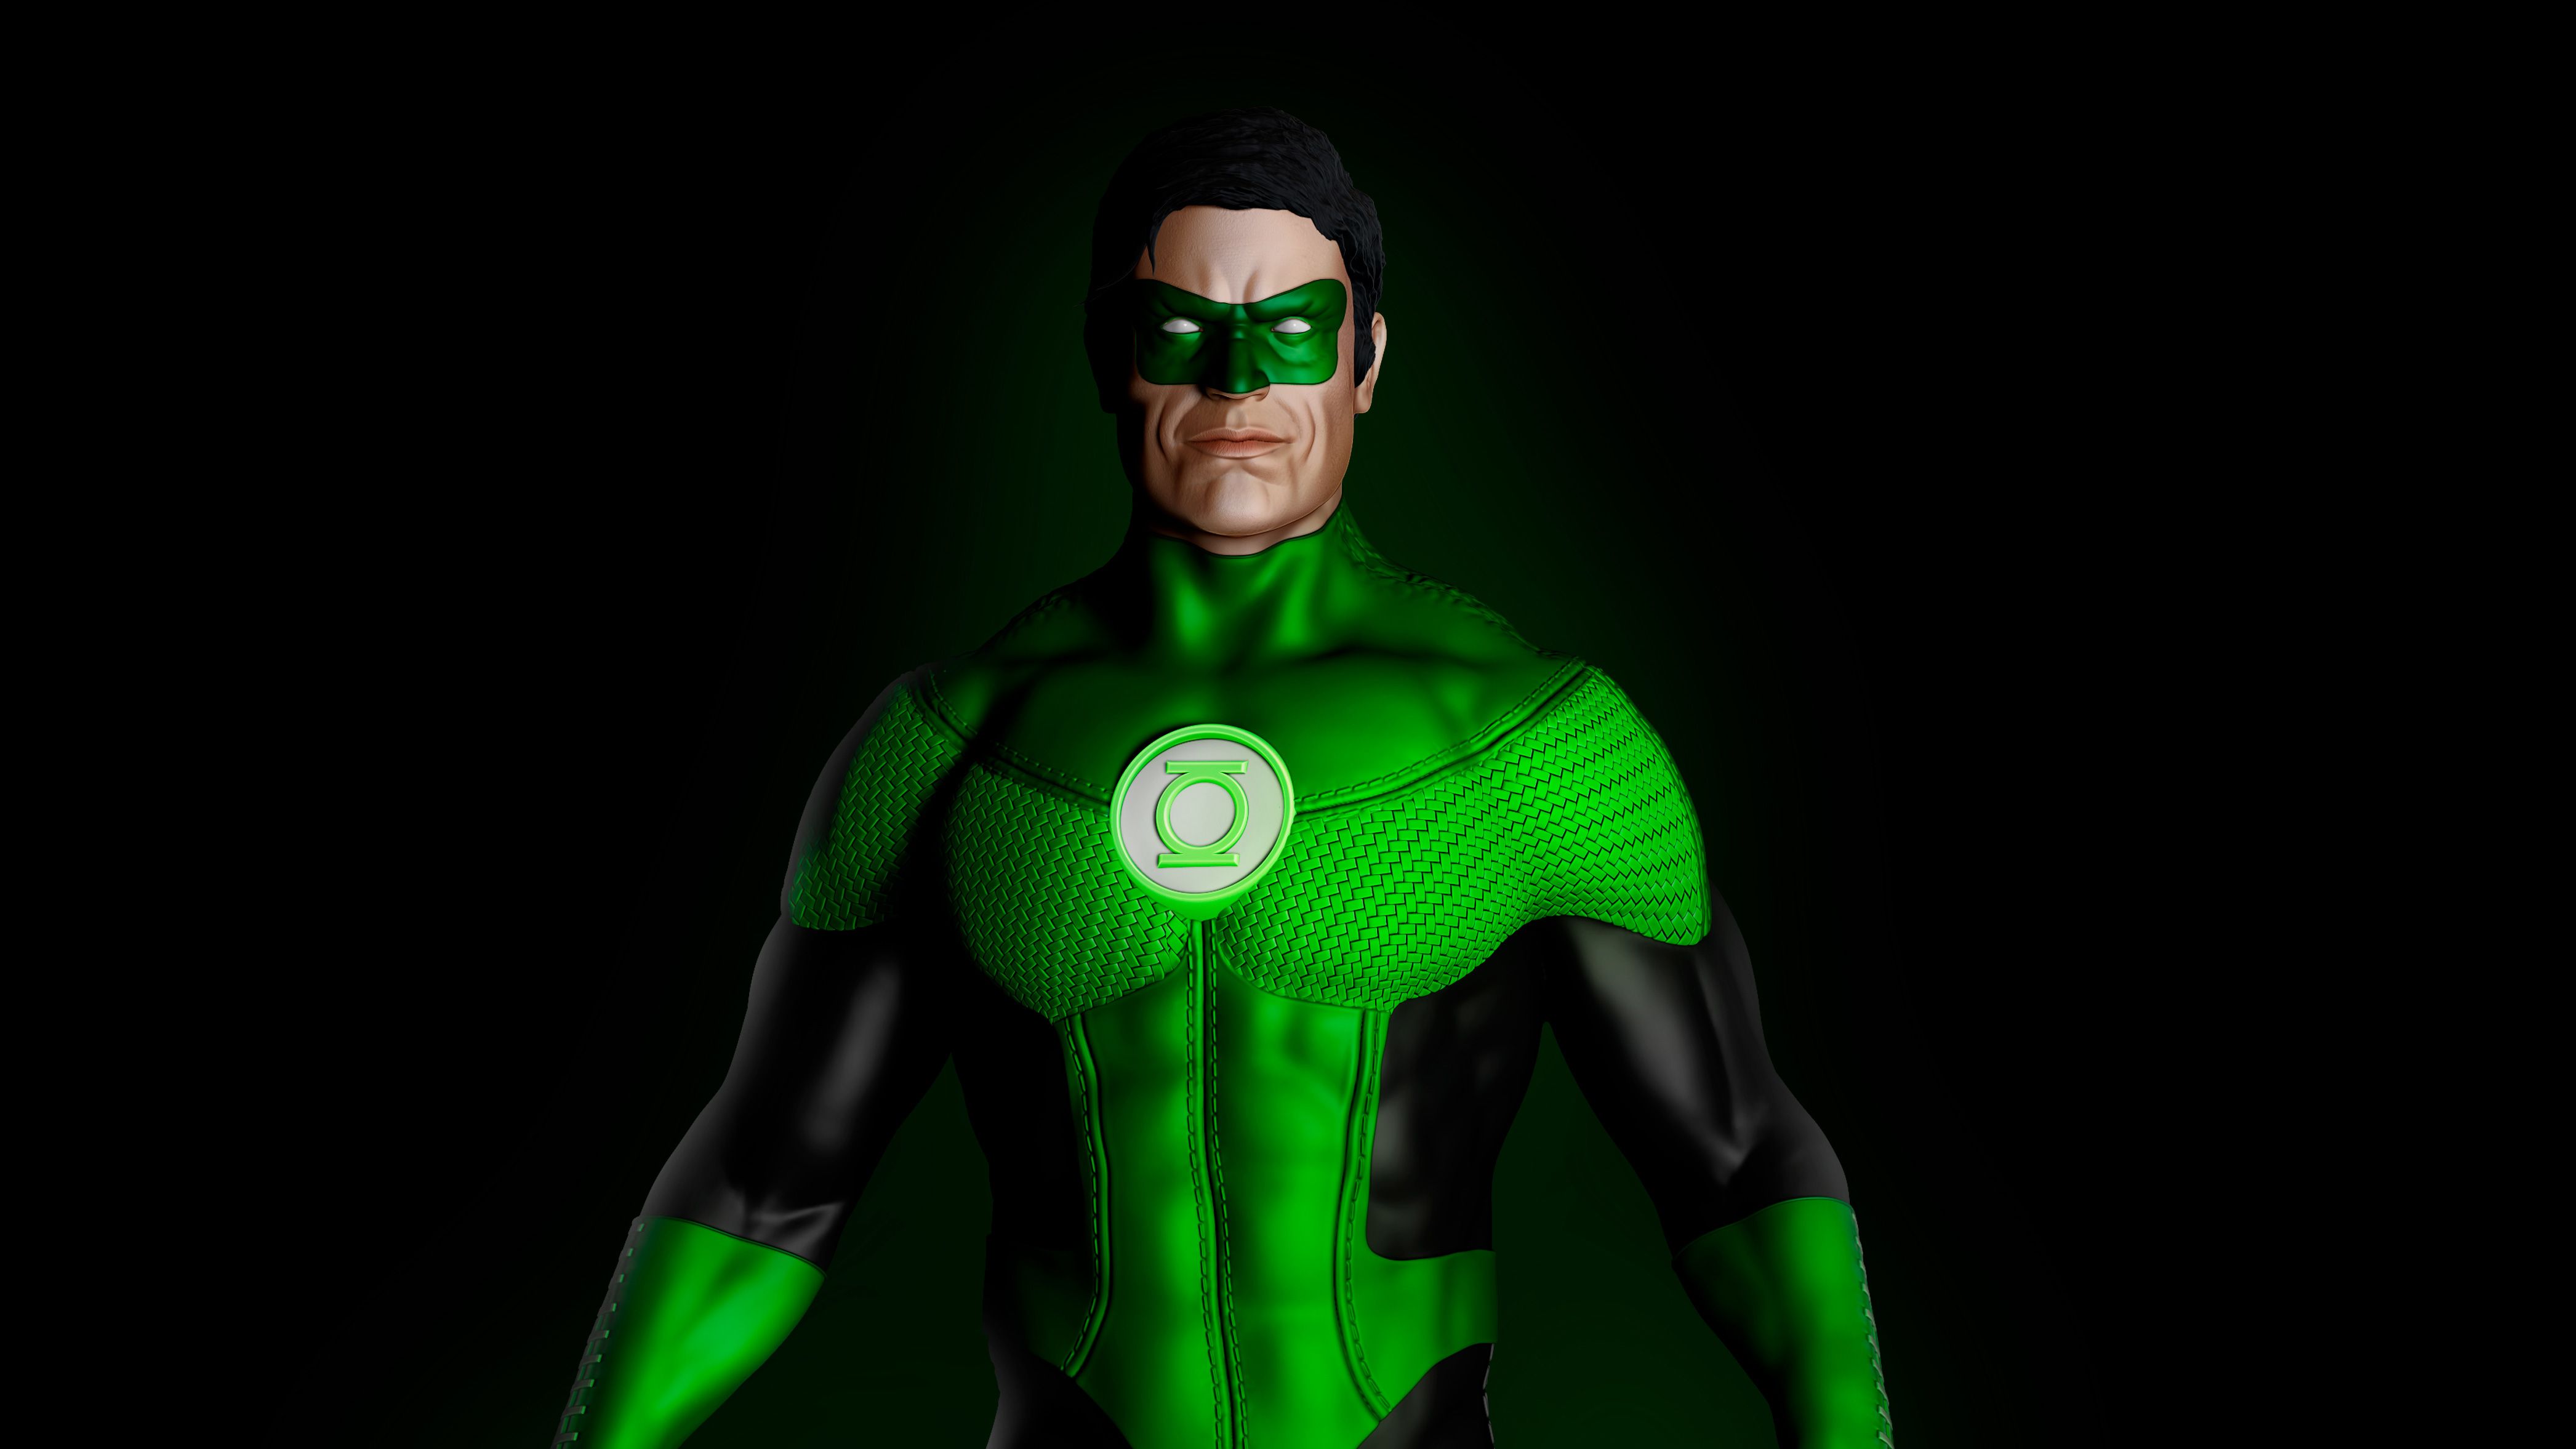 Green Lantern Fan Art, HD Superheroes, 4k Wallpaper, Image, Background, Photo and Picture